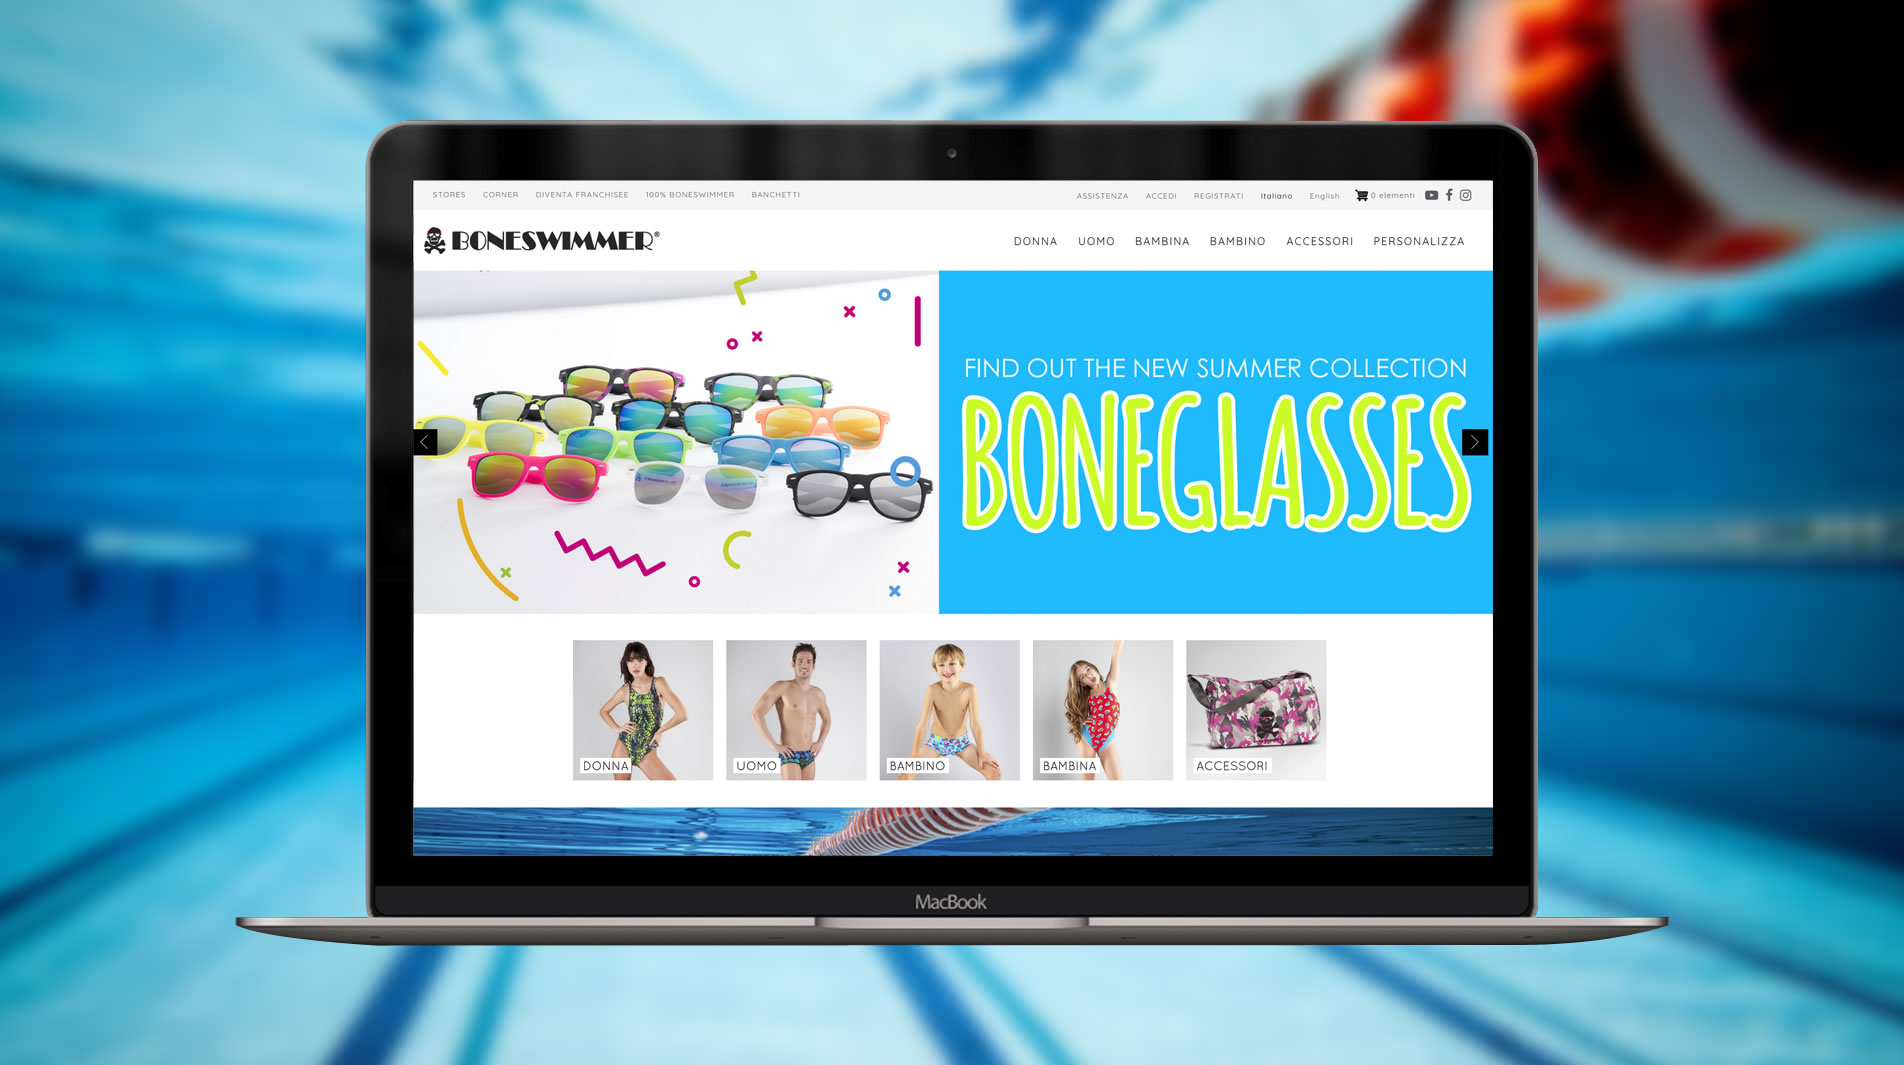 Ecommerce content marketing social media marketing boneswimmer - Unique